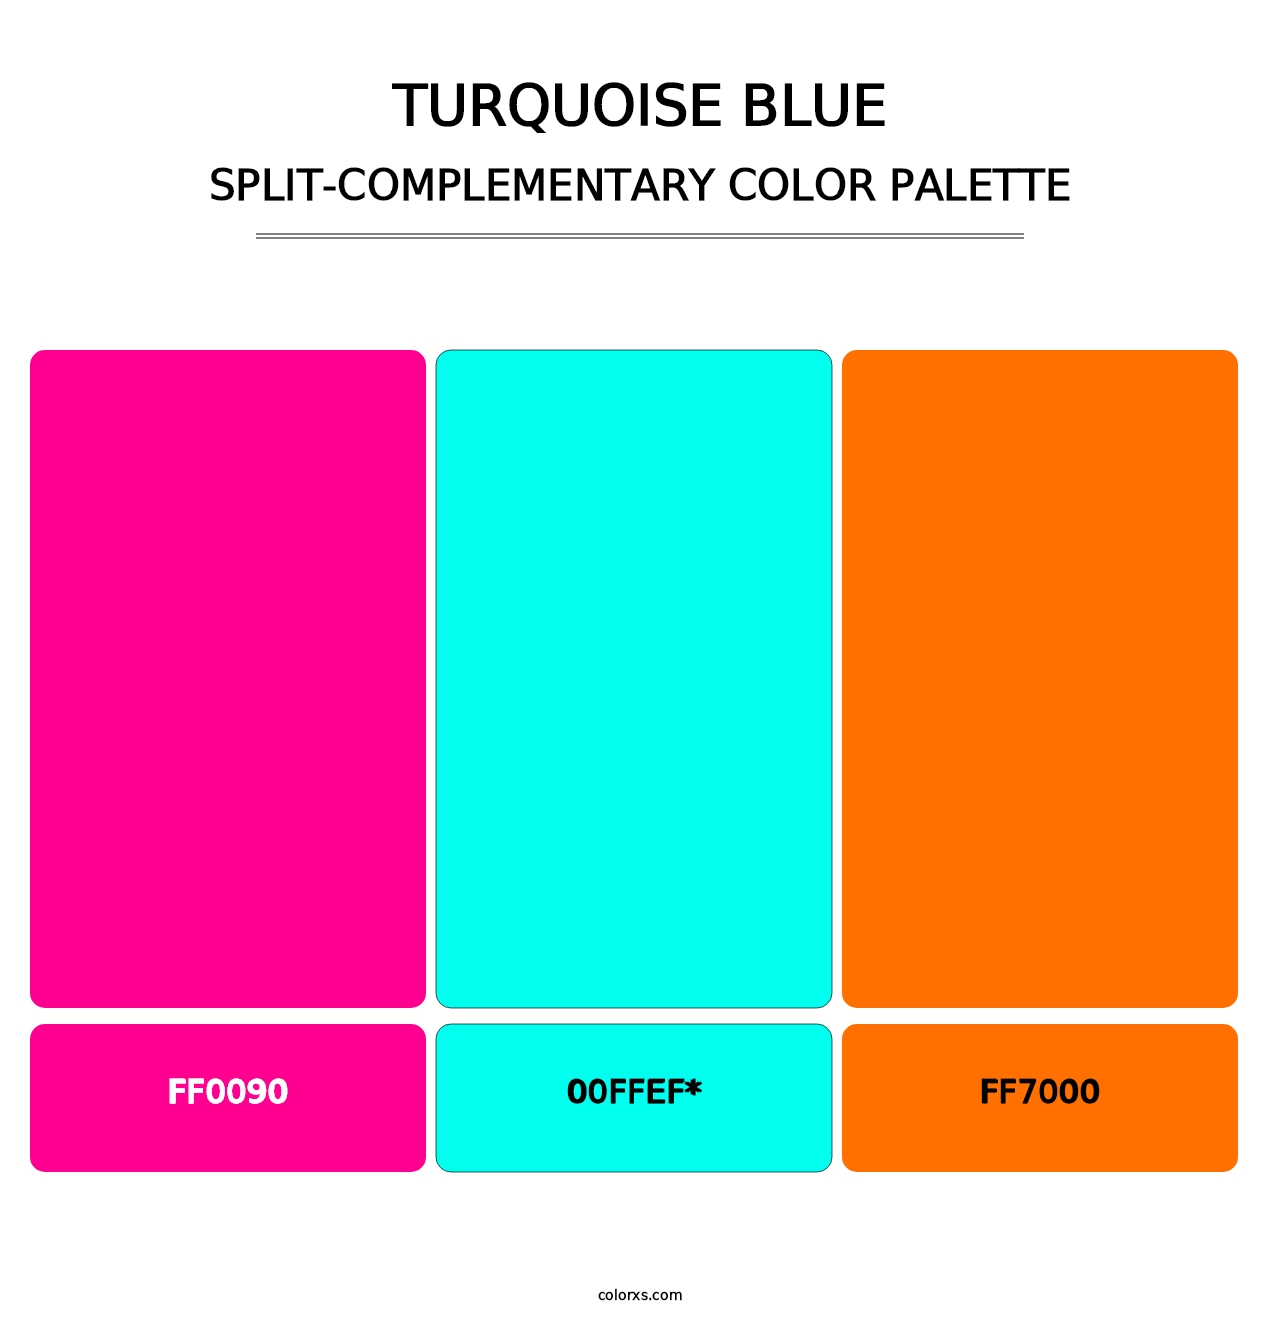 Turquoise Blue - Split-Complementary Color Palette